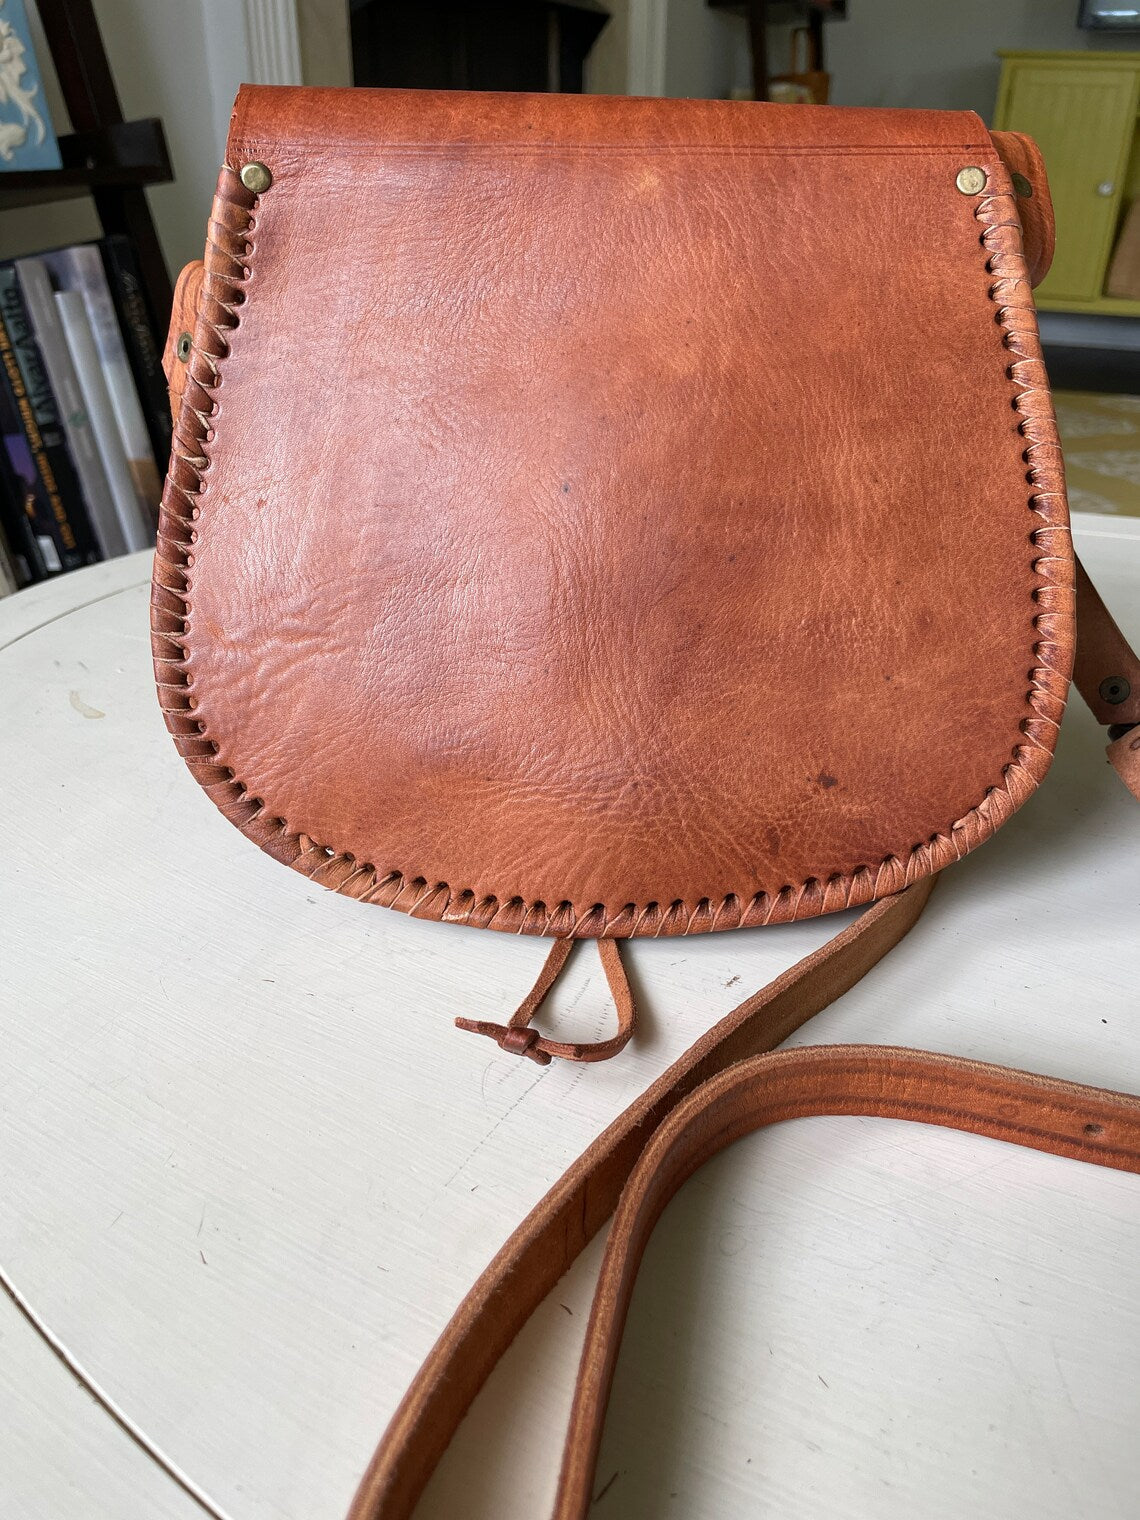 70's Style Handmade Leather Cross Body Bag